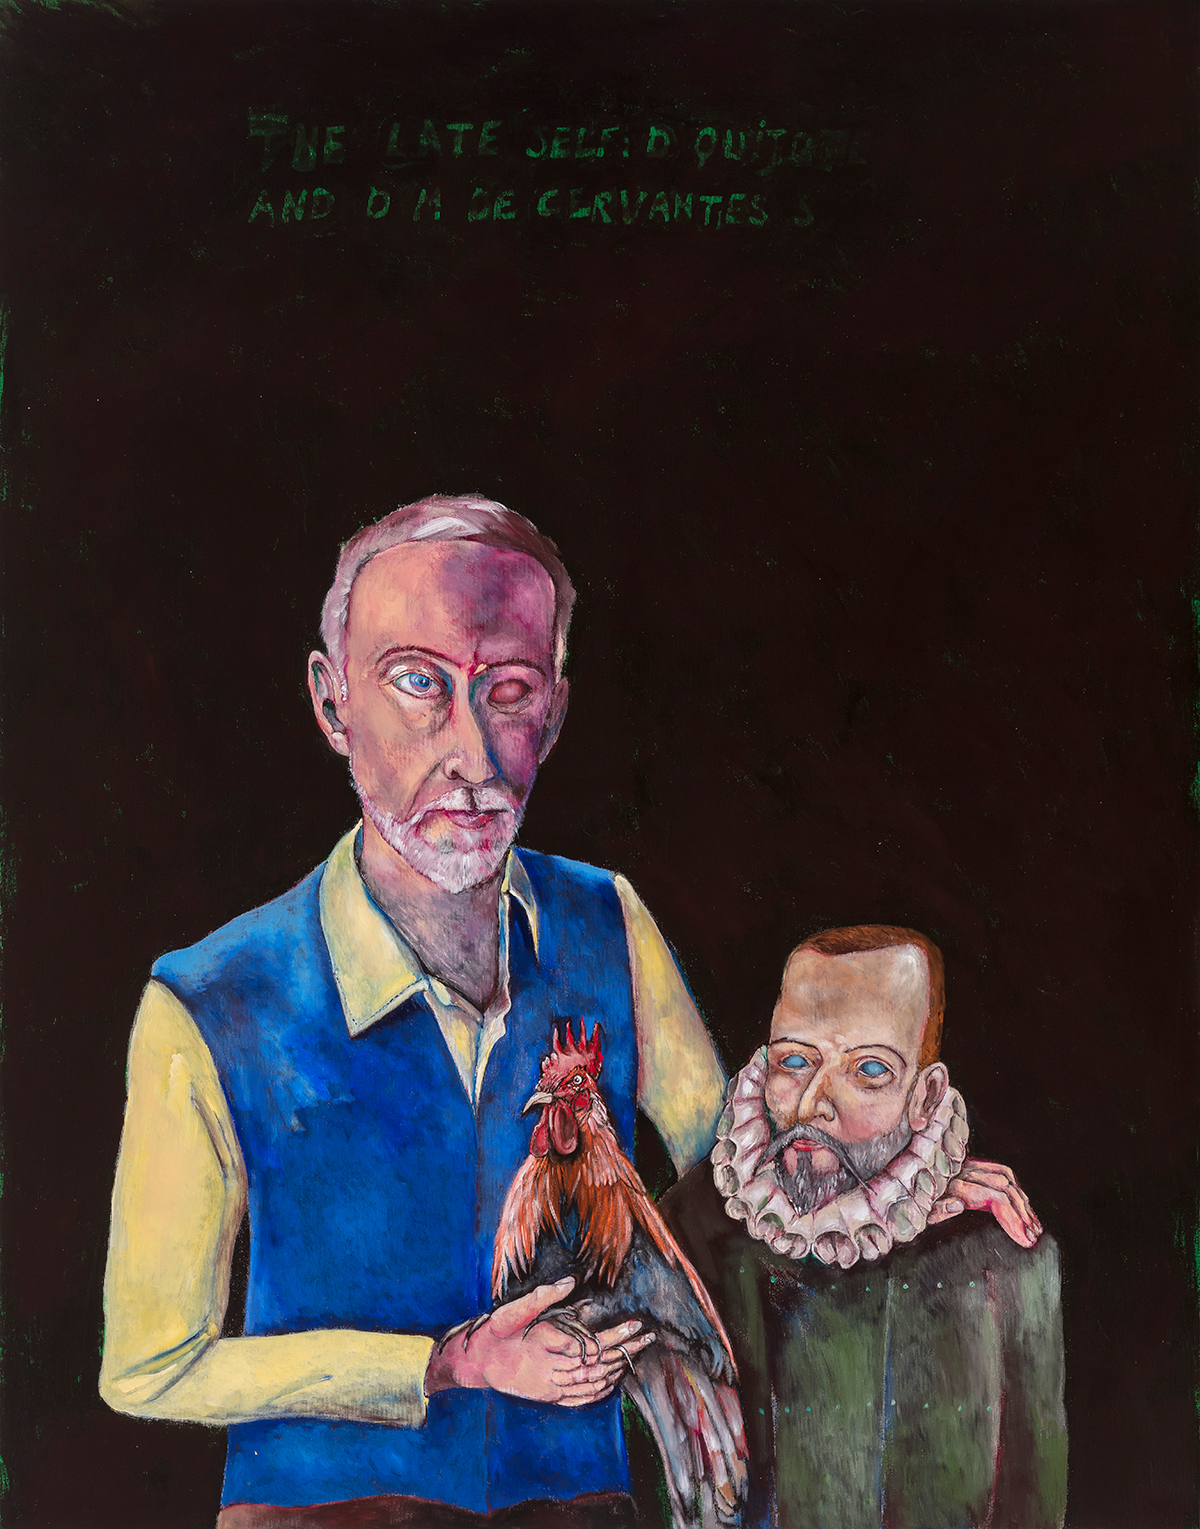  - The late self: Don Quixote y M de Cervantes Saavedra, 2014